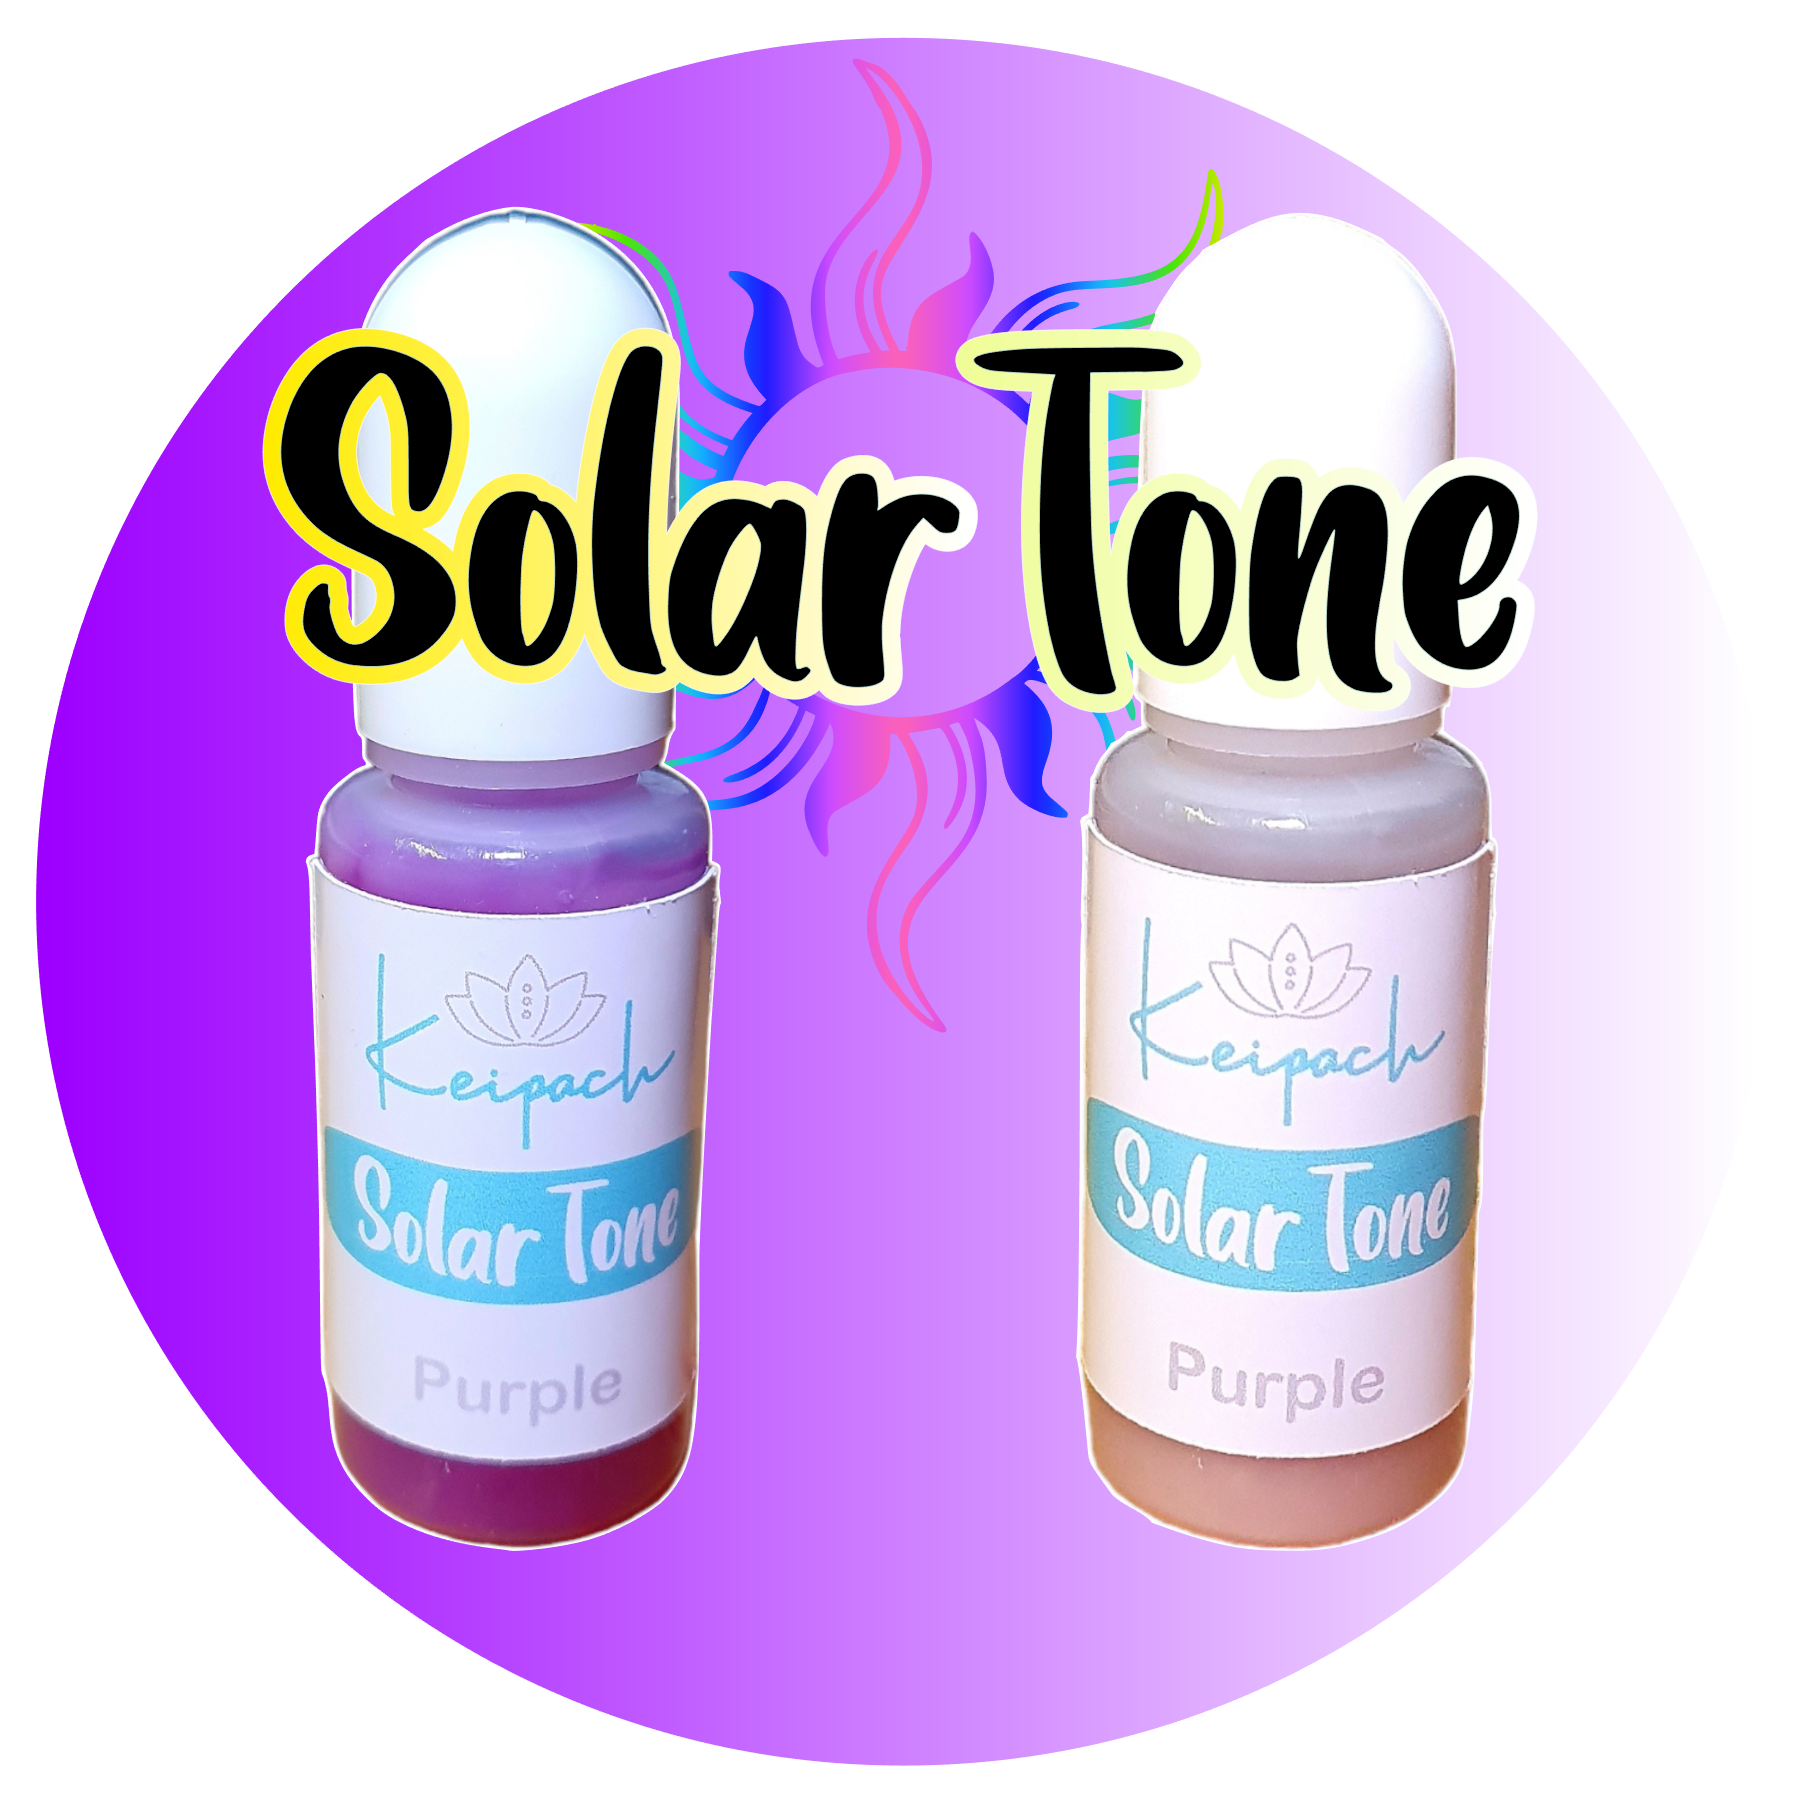 SolarTone Dye - Purple - Keipach